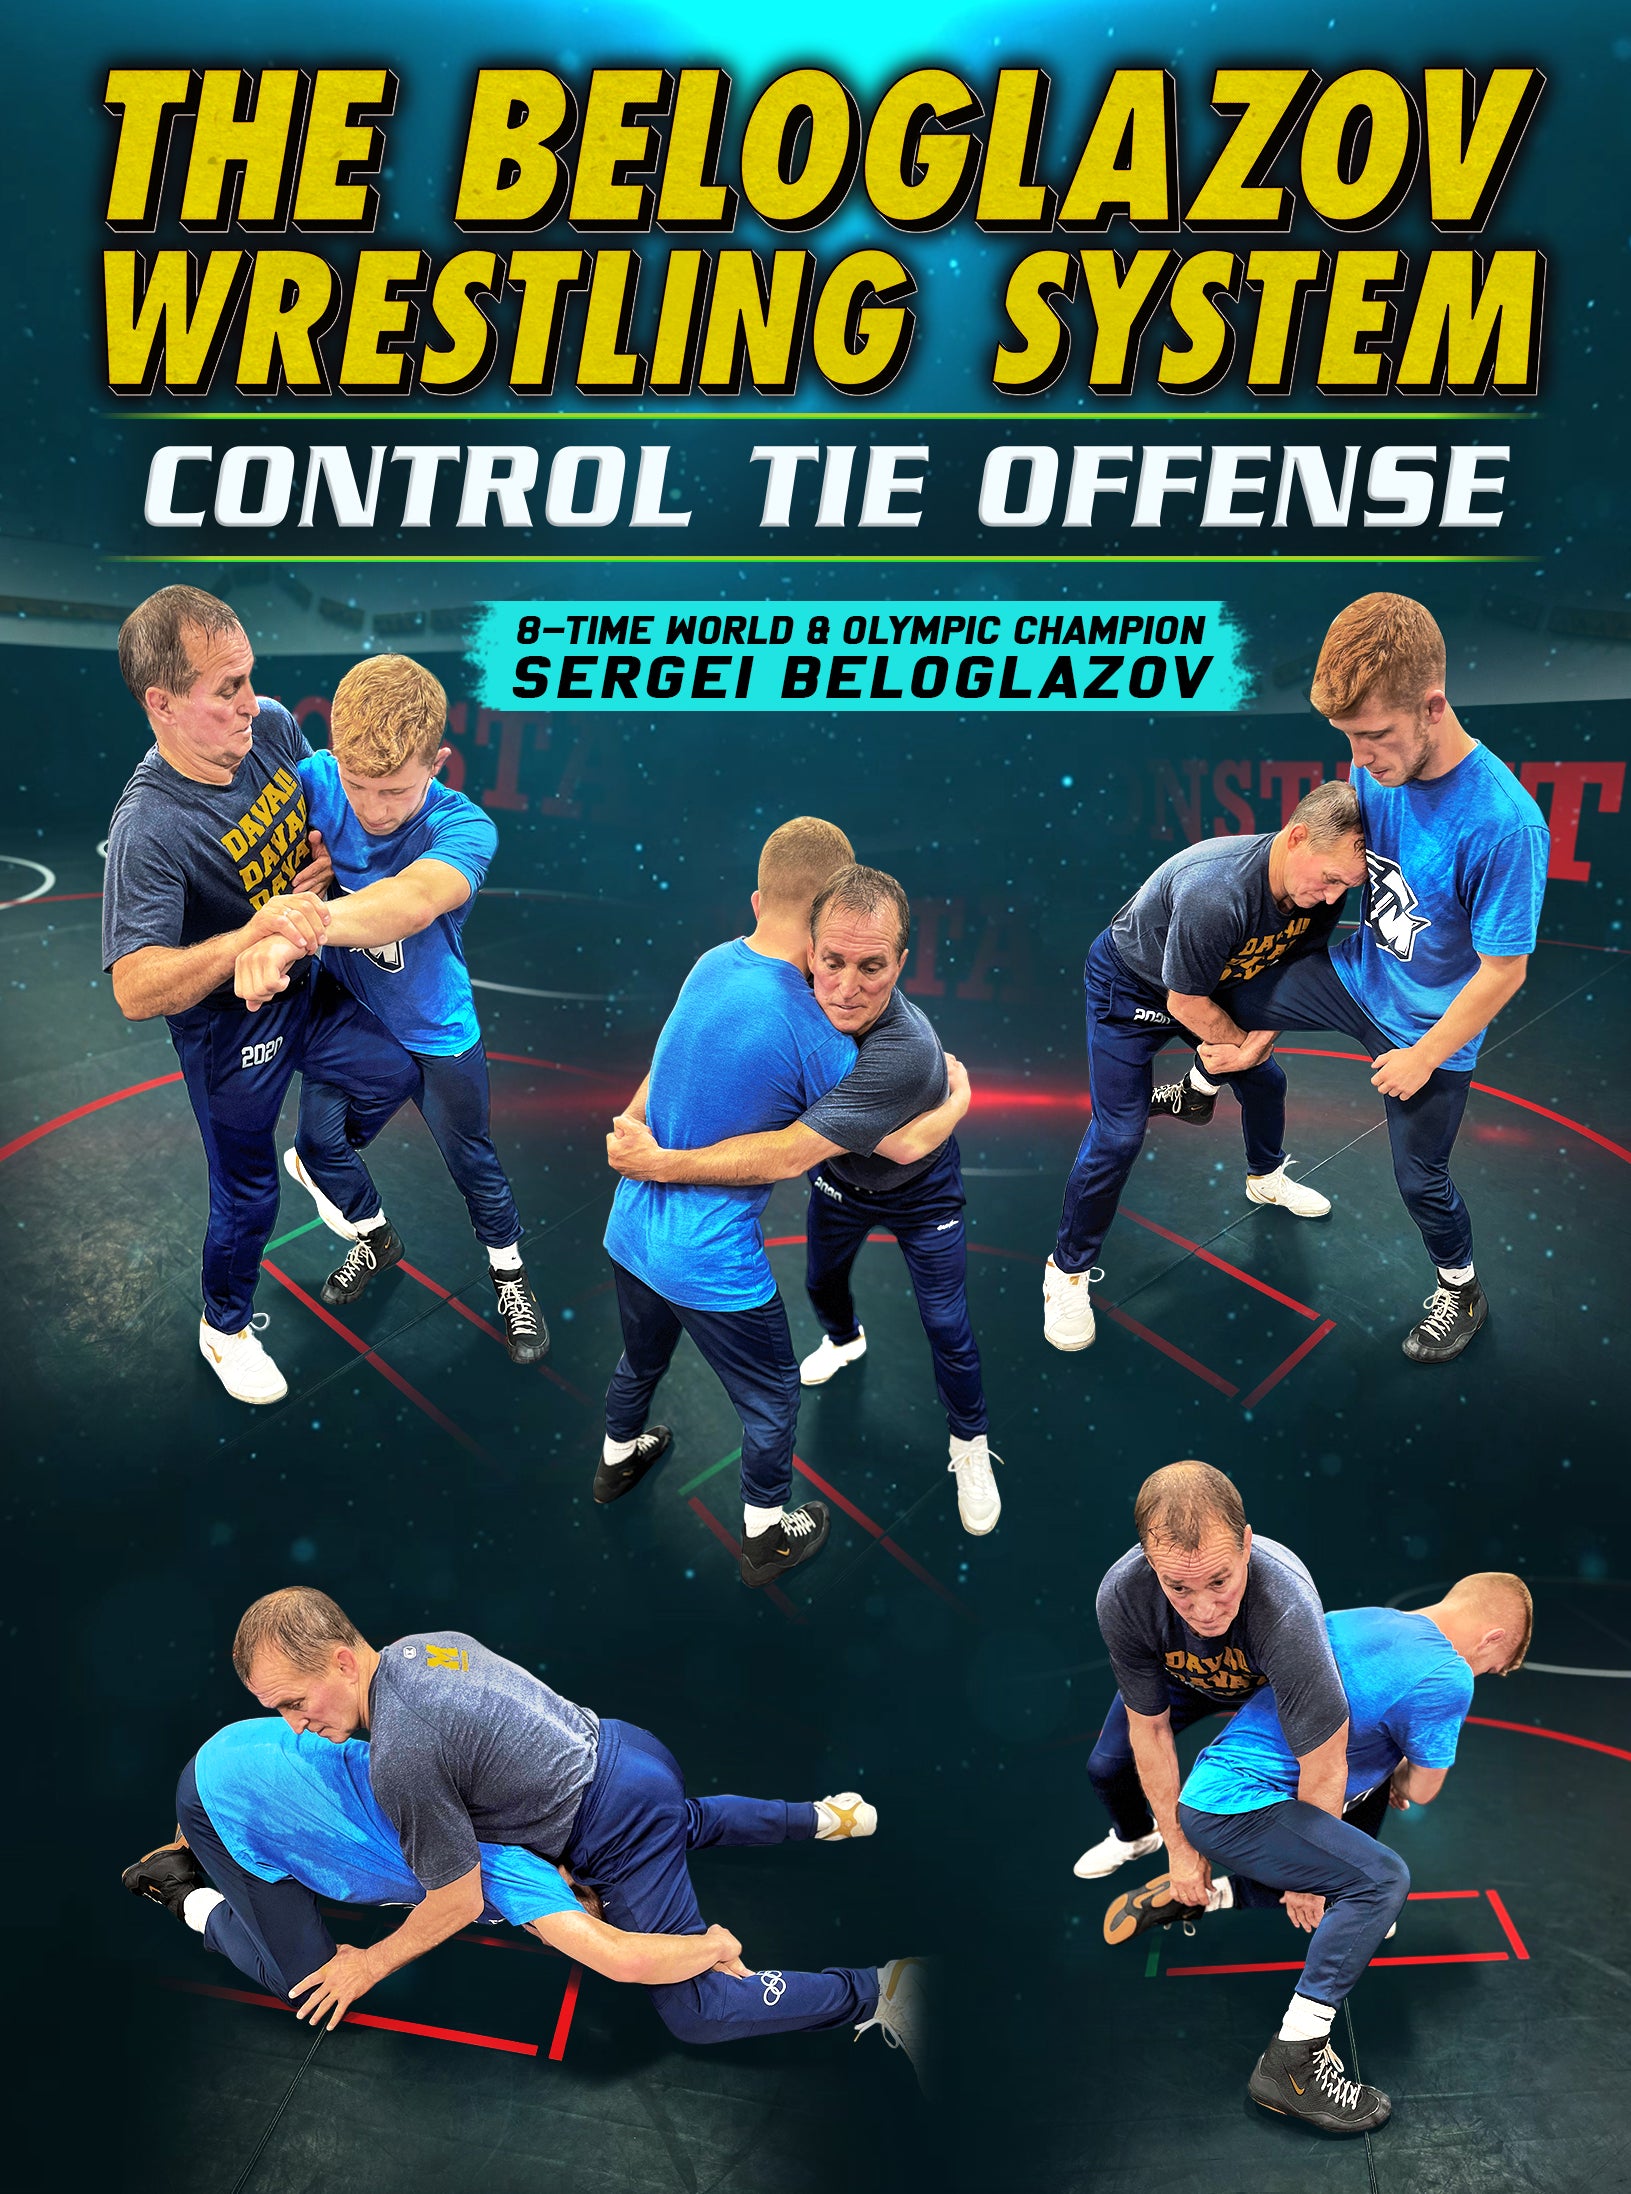 WRESTLING: Systema Fundamentals (DVD) – Systema HQ Toronto